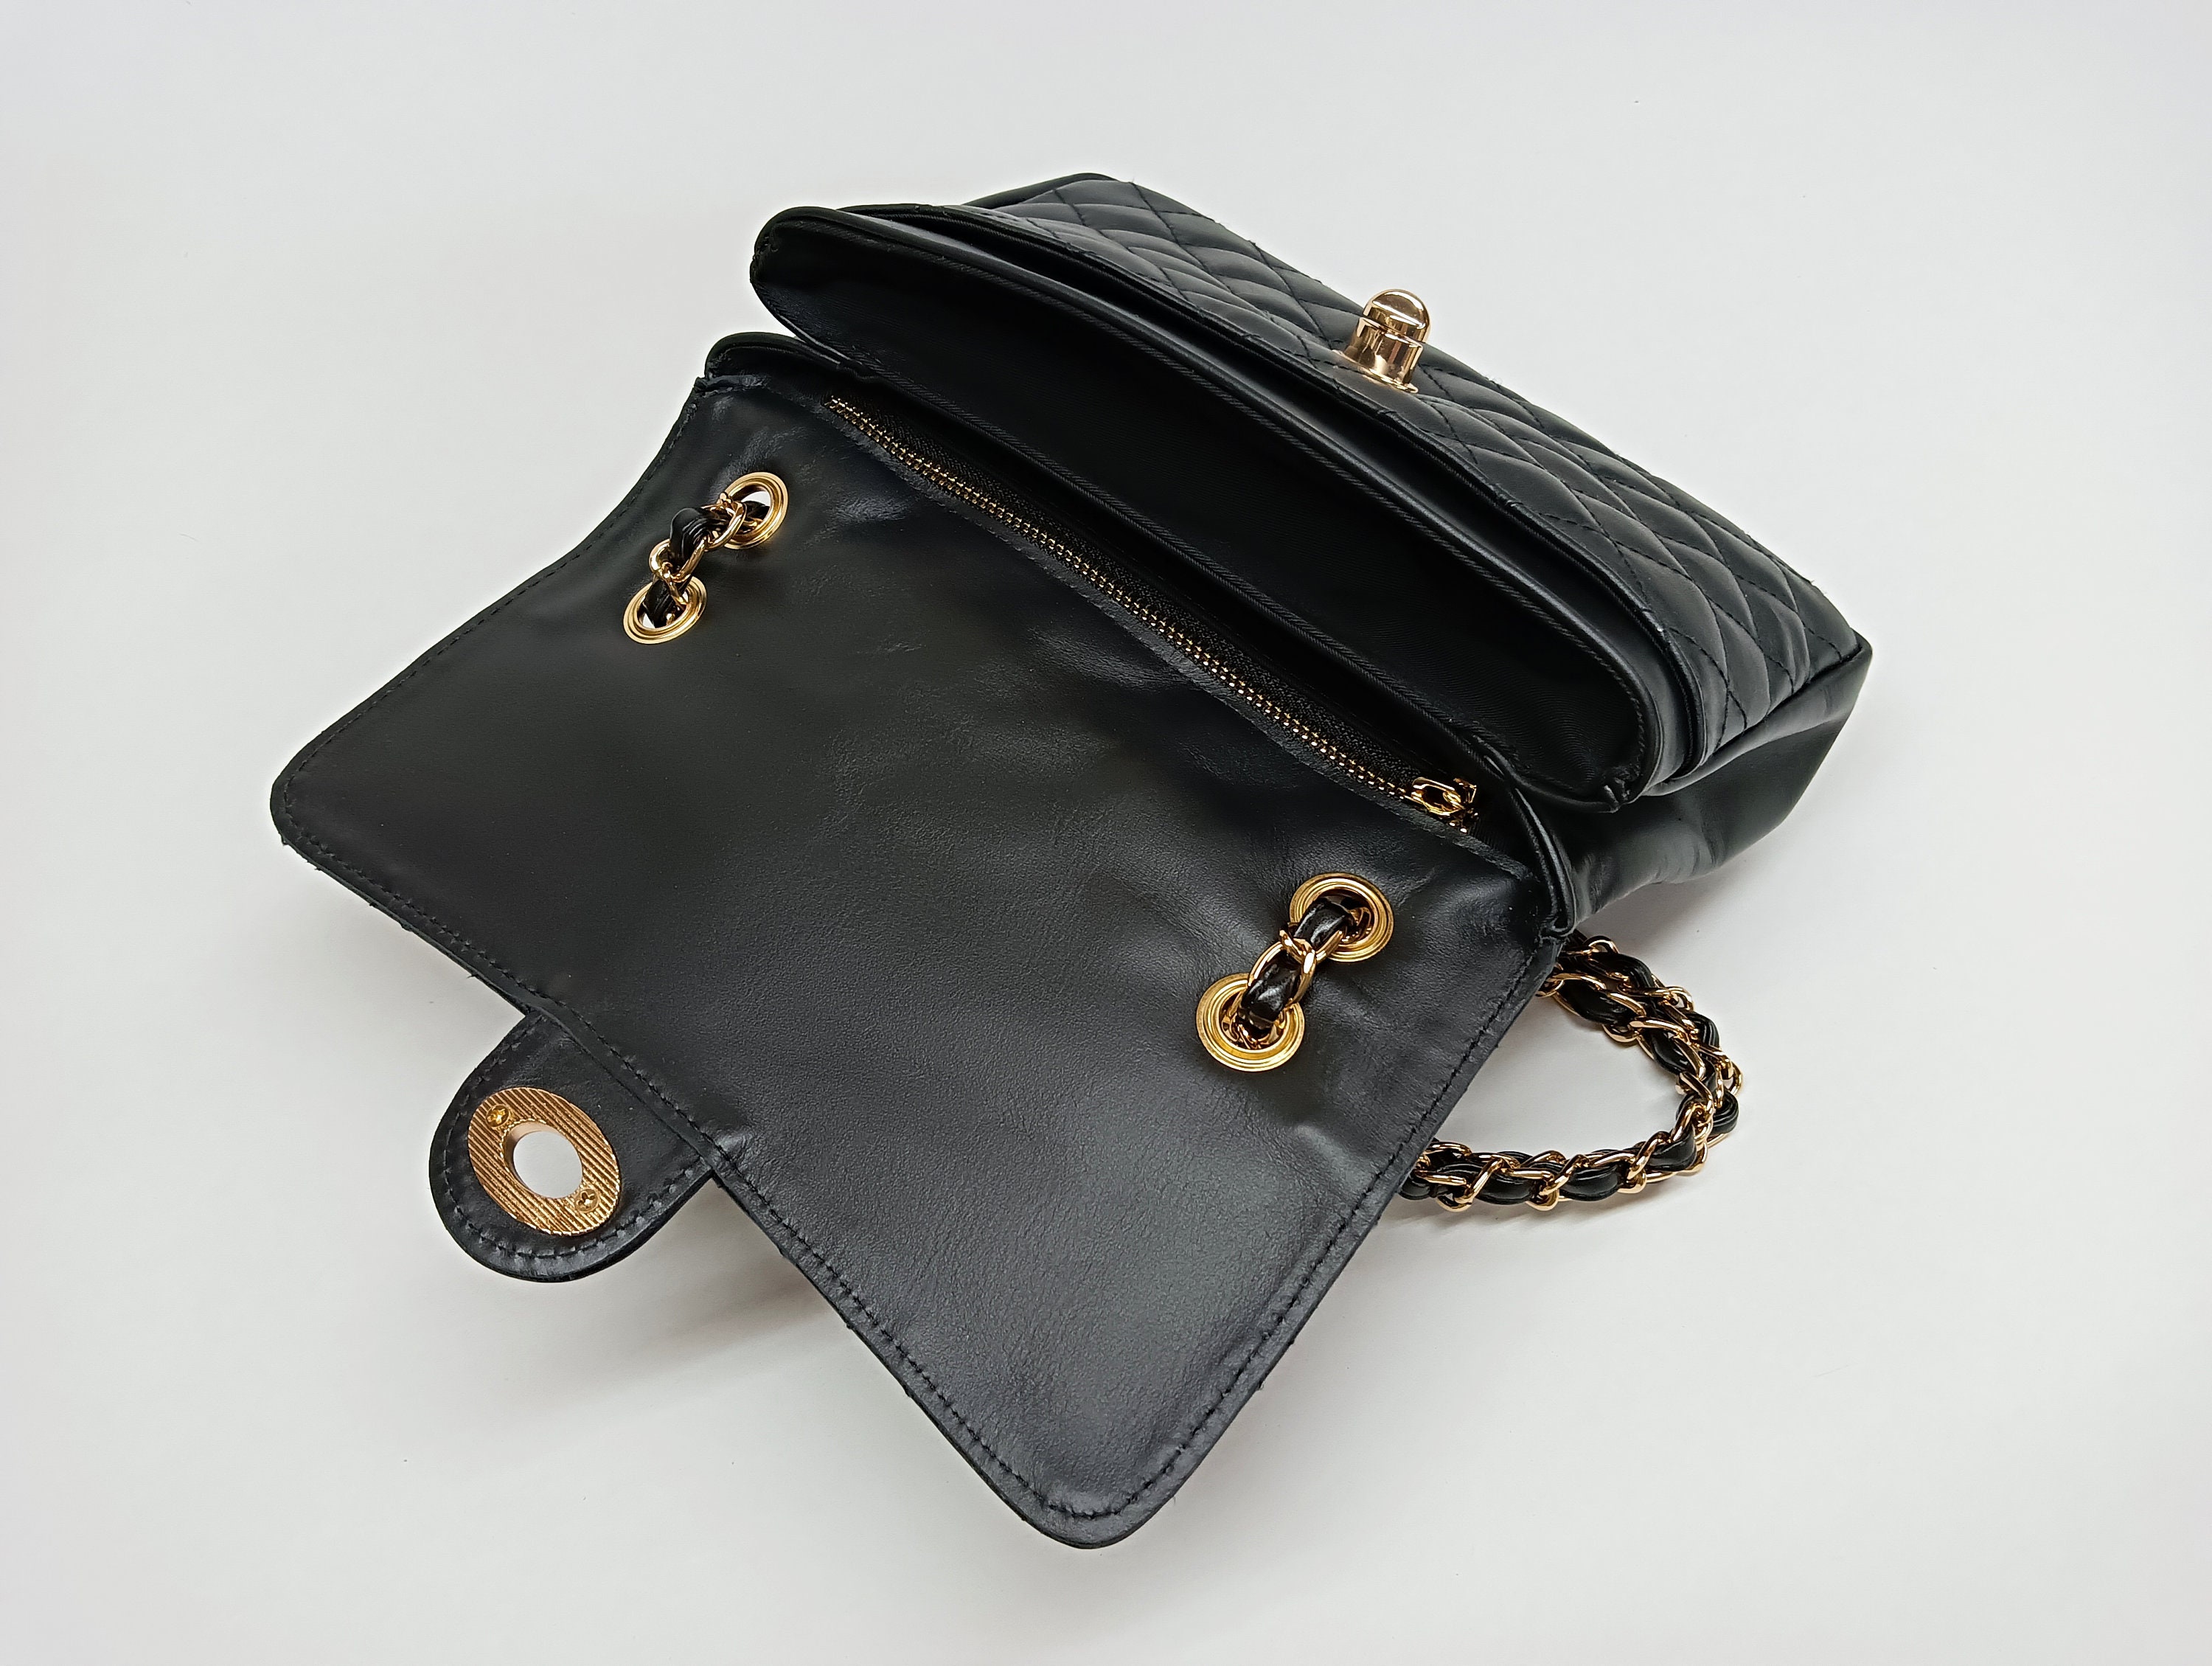 Underwhelmed by secondhand Chanel : r/handbags